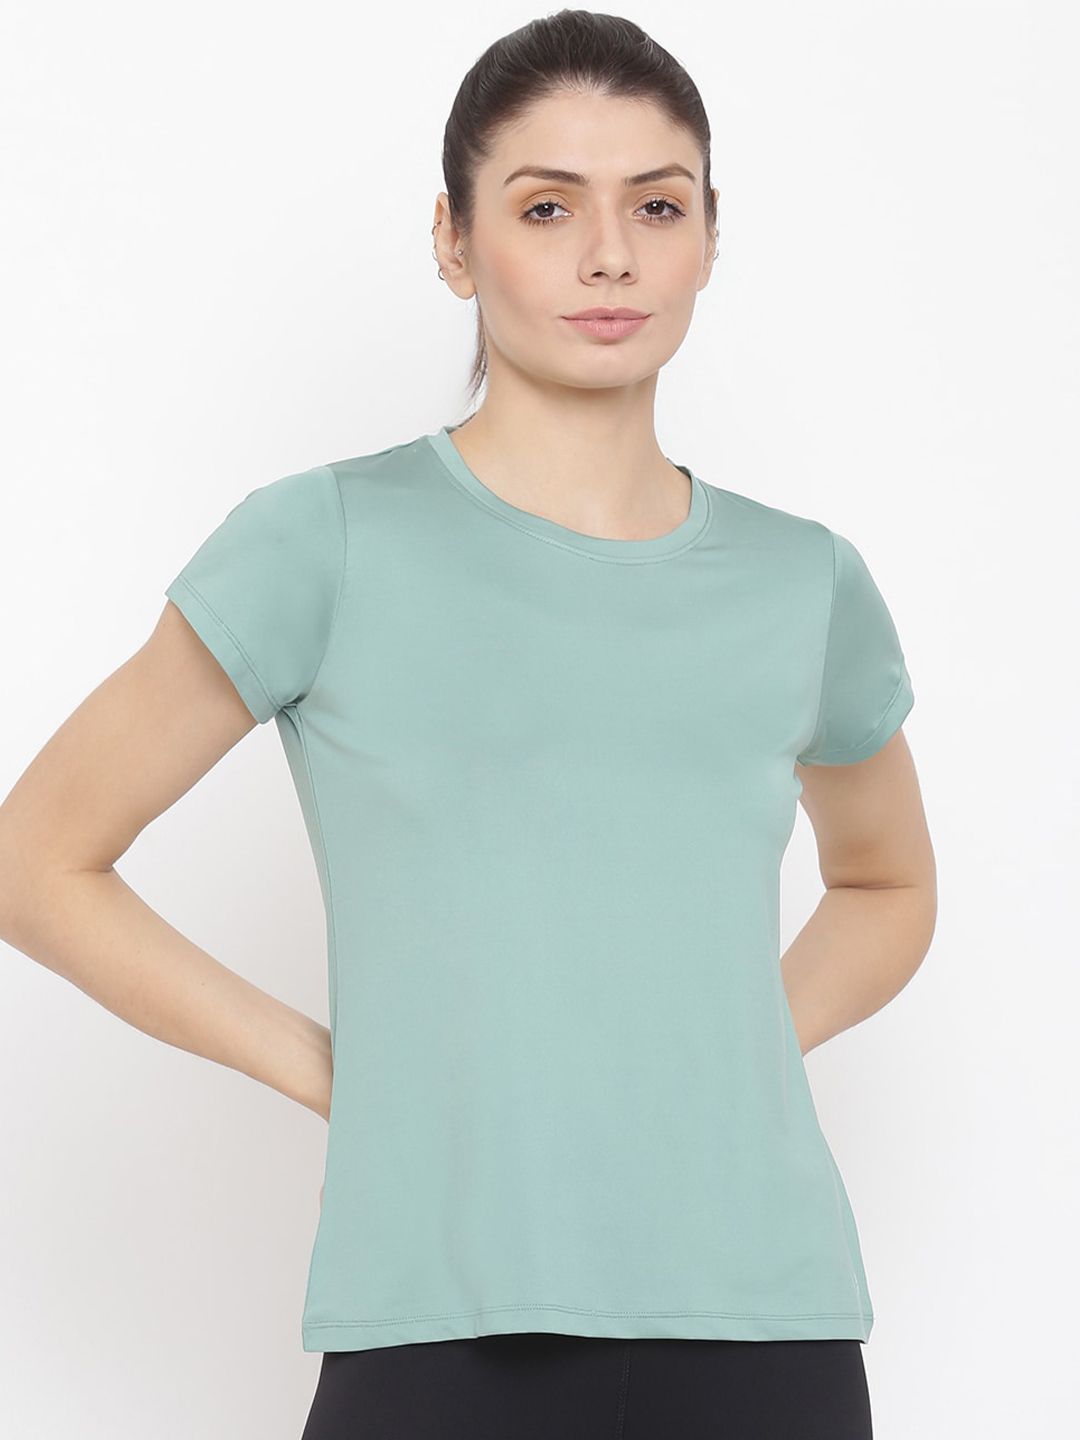 MKH Women Green Dri-FIT T-shirt Price in India